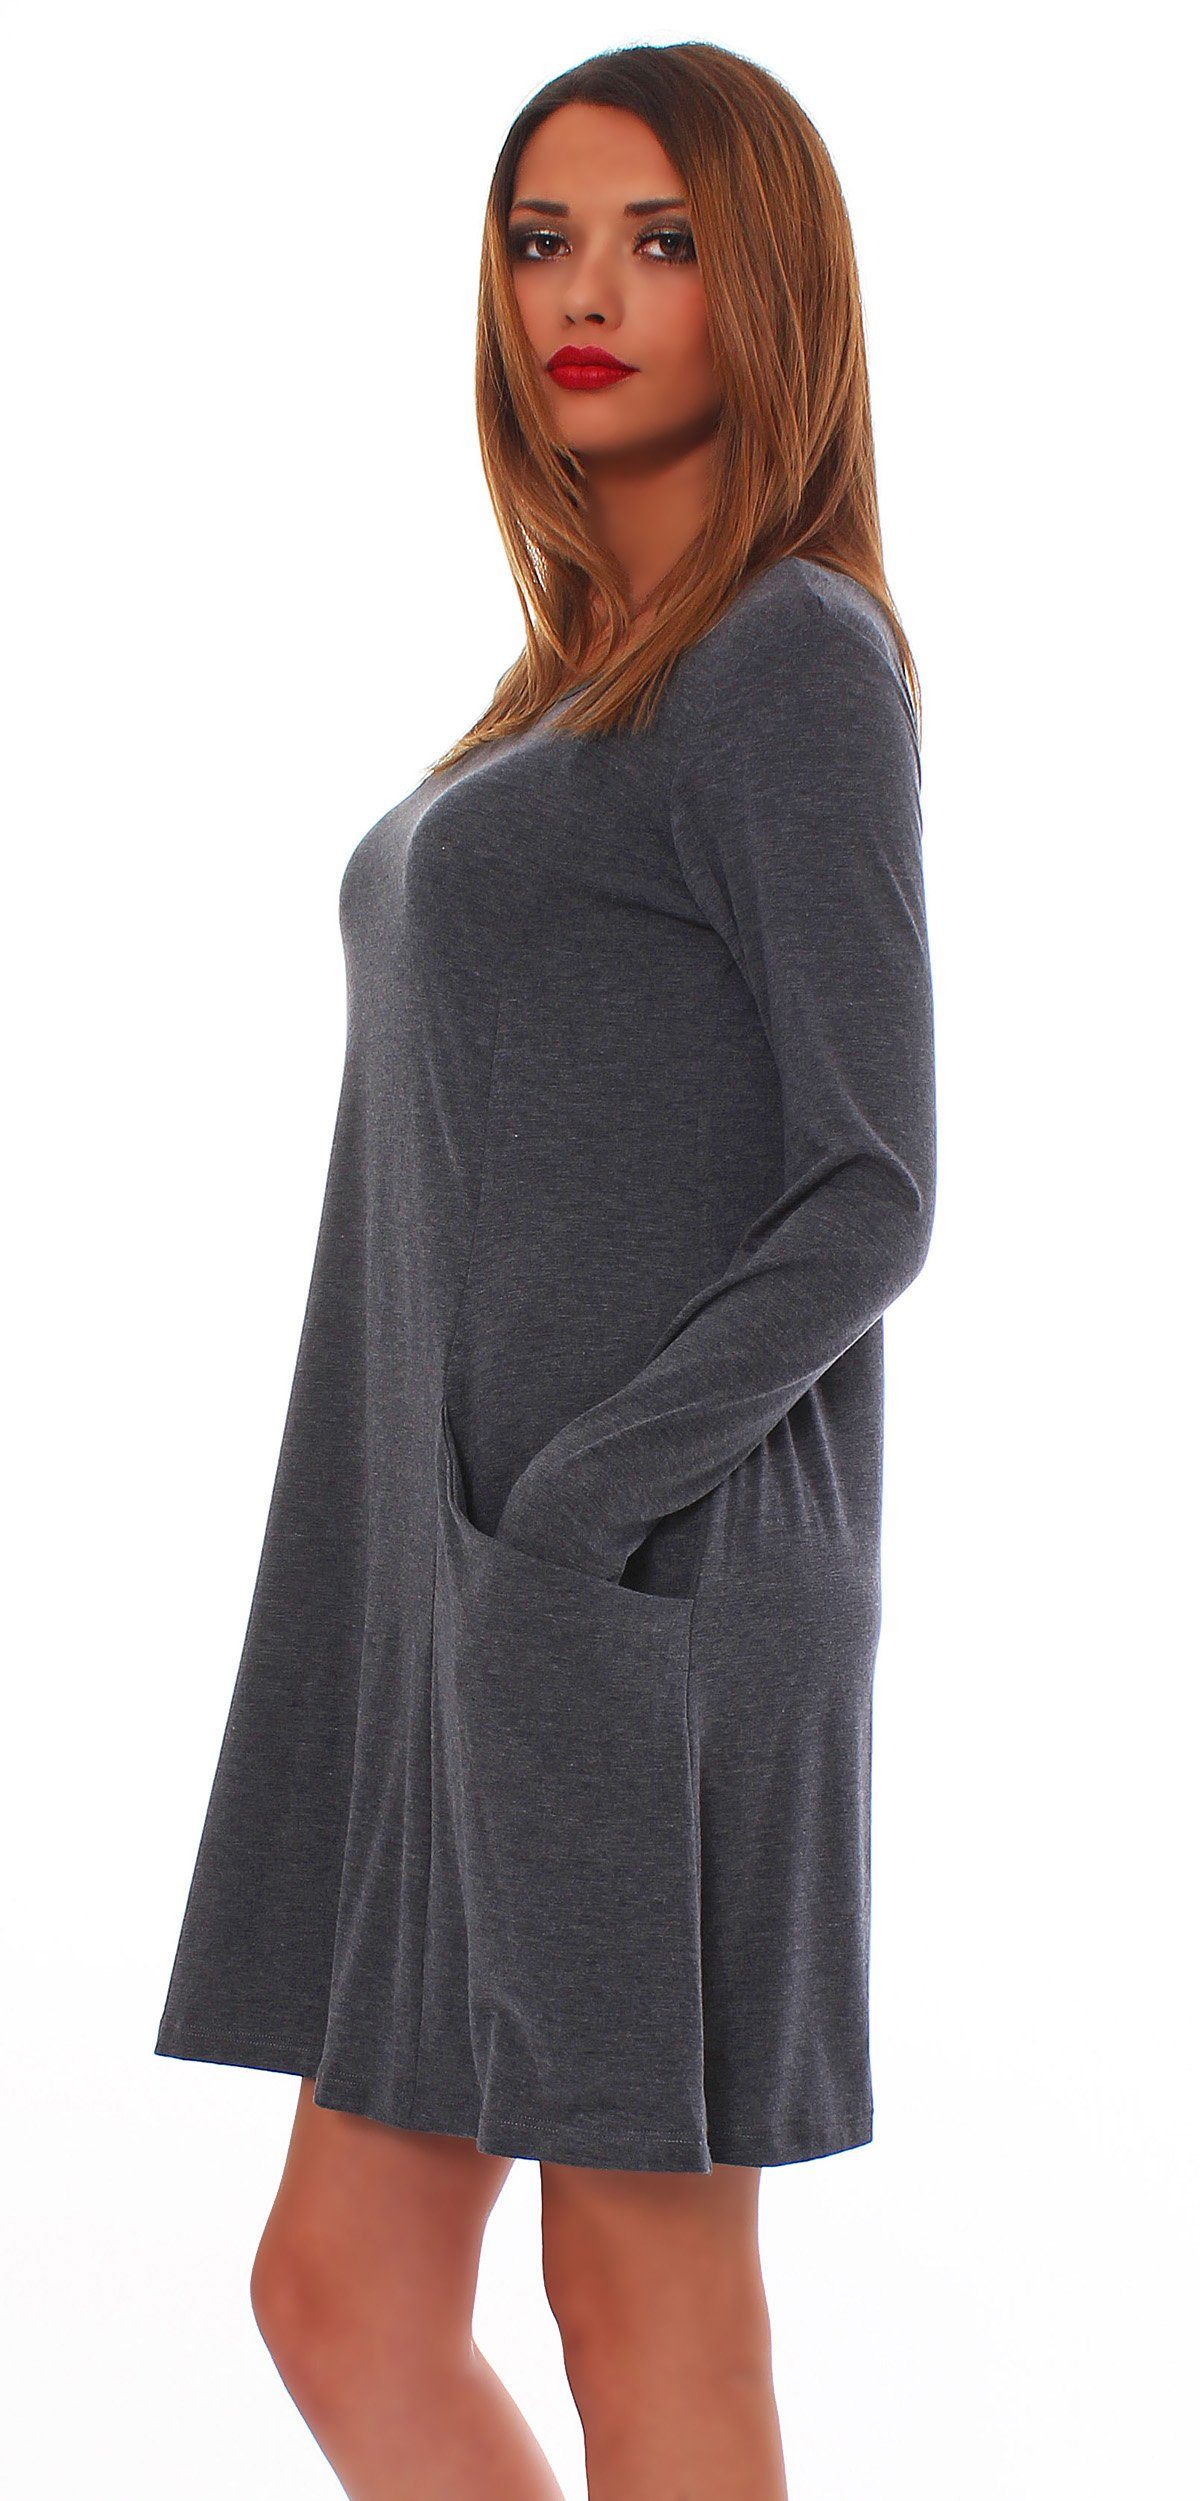 Taschen Longshirt Pulli mit Tunika 6514 Graphit_Lang Minikleid Tunika Mississhop Kleid A-Linien-Kleid